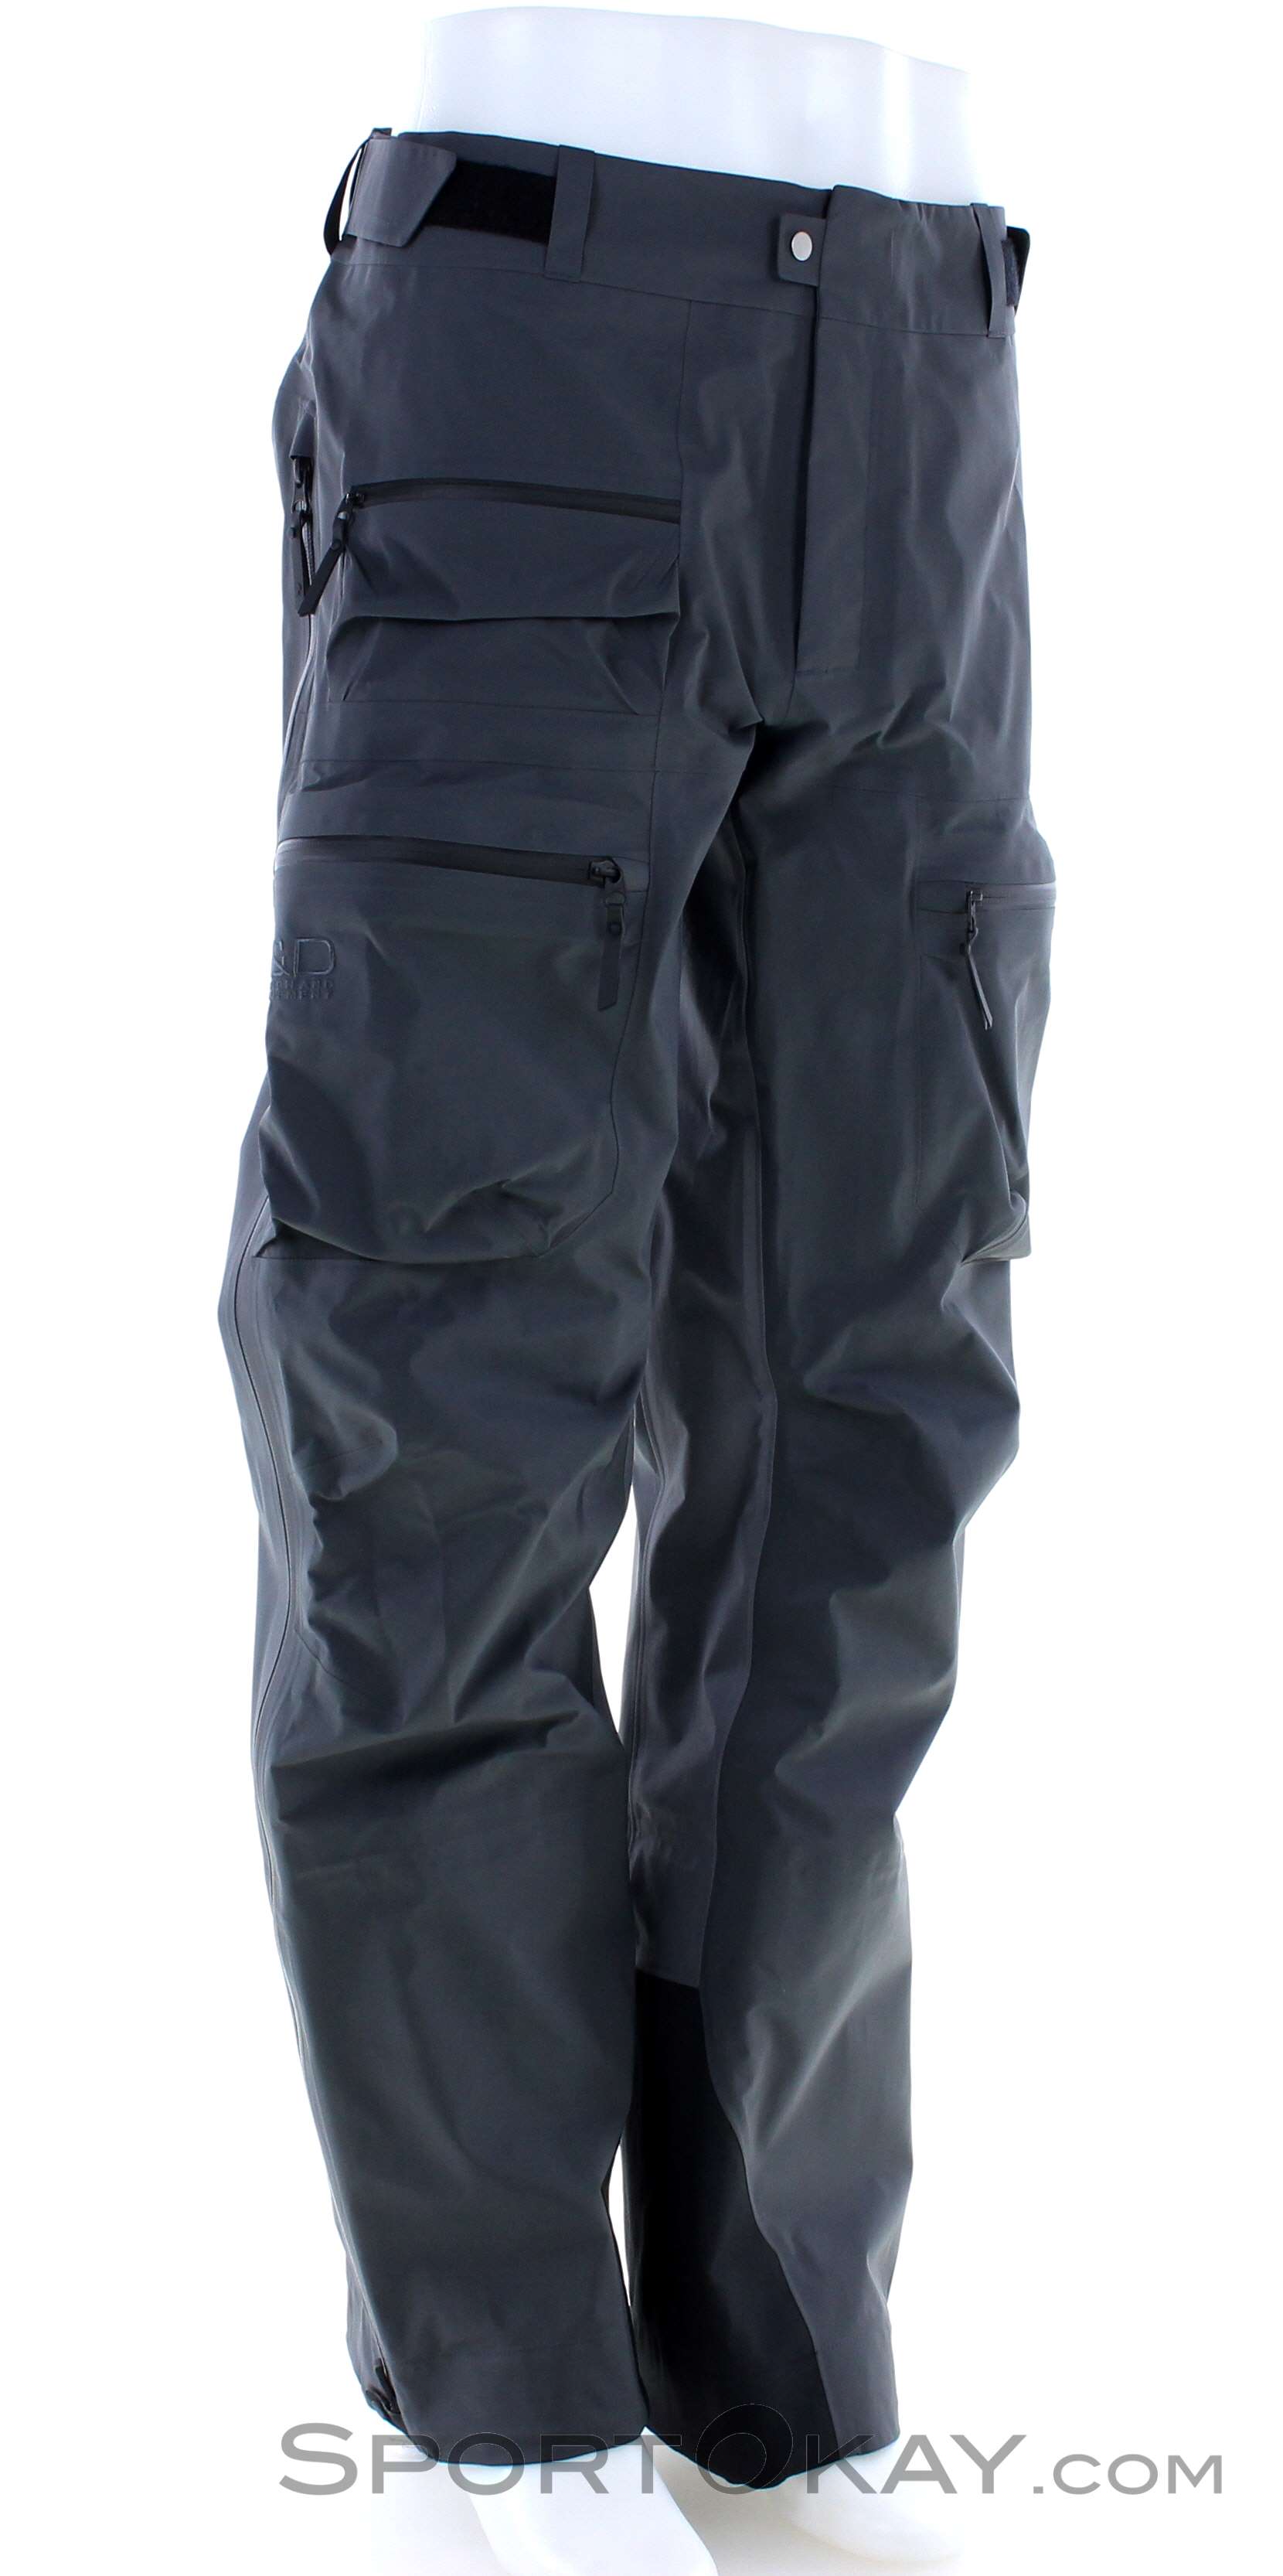 vislight pro goretex 3l pants men - OFF-68% >Free Delivery